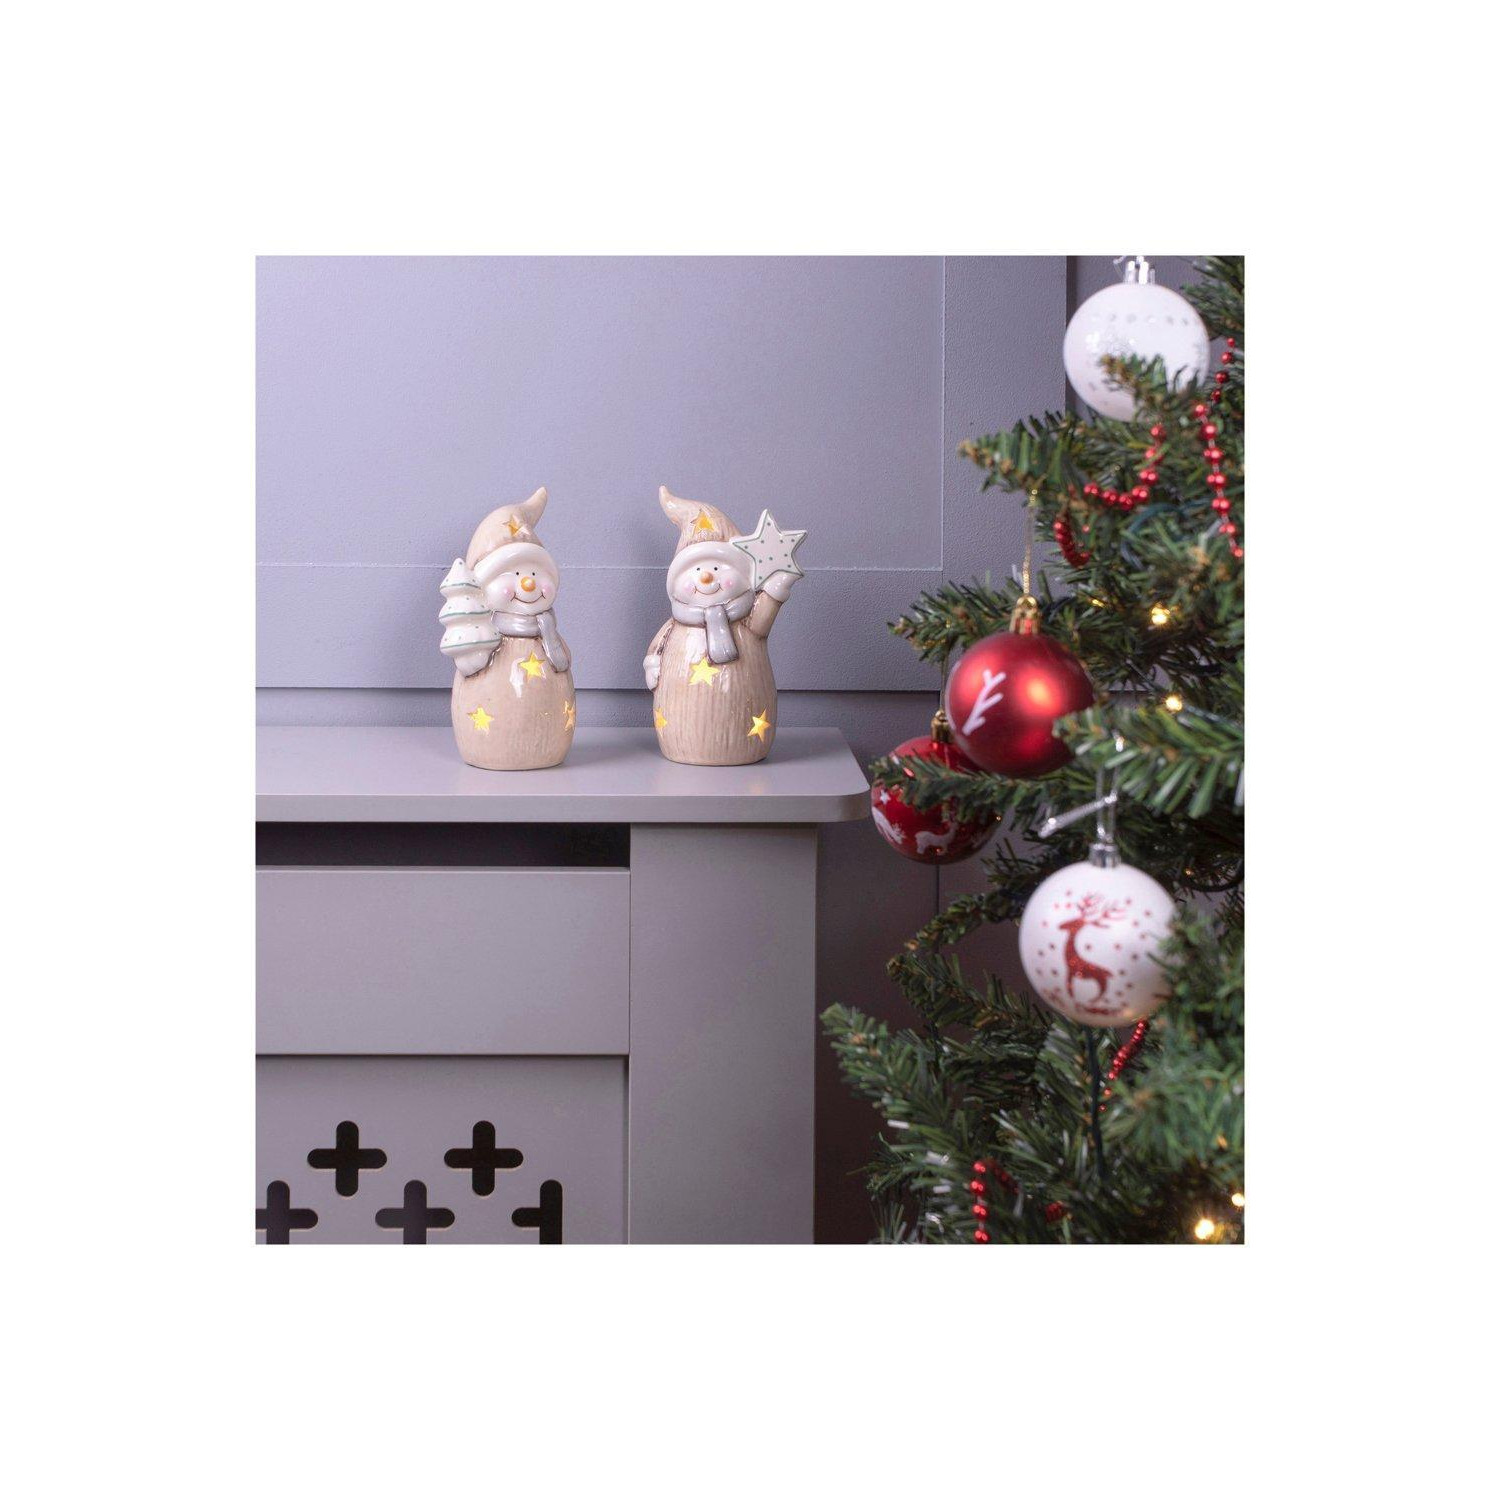 Netagon Festive Christmas Ceramic Light Up Snowmen Decoration Ornaments - Pair - image 1